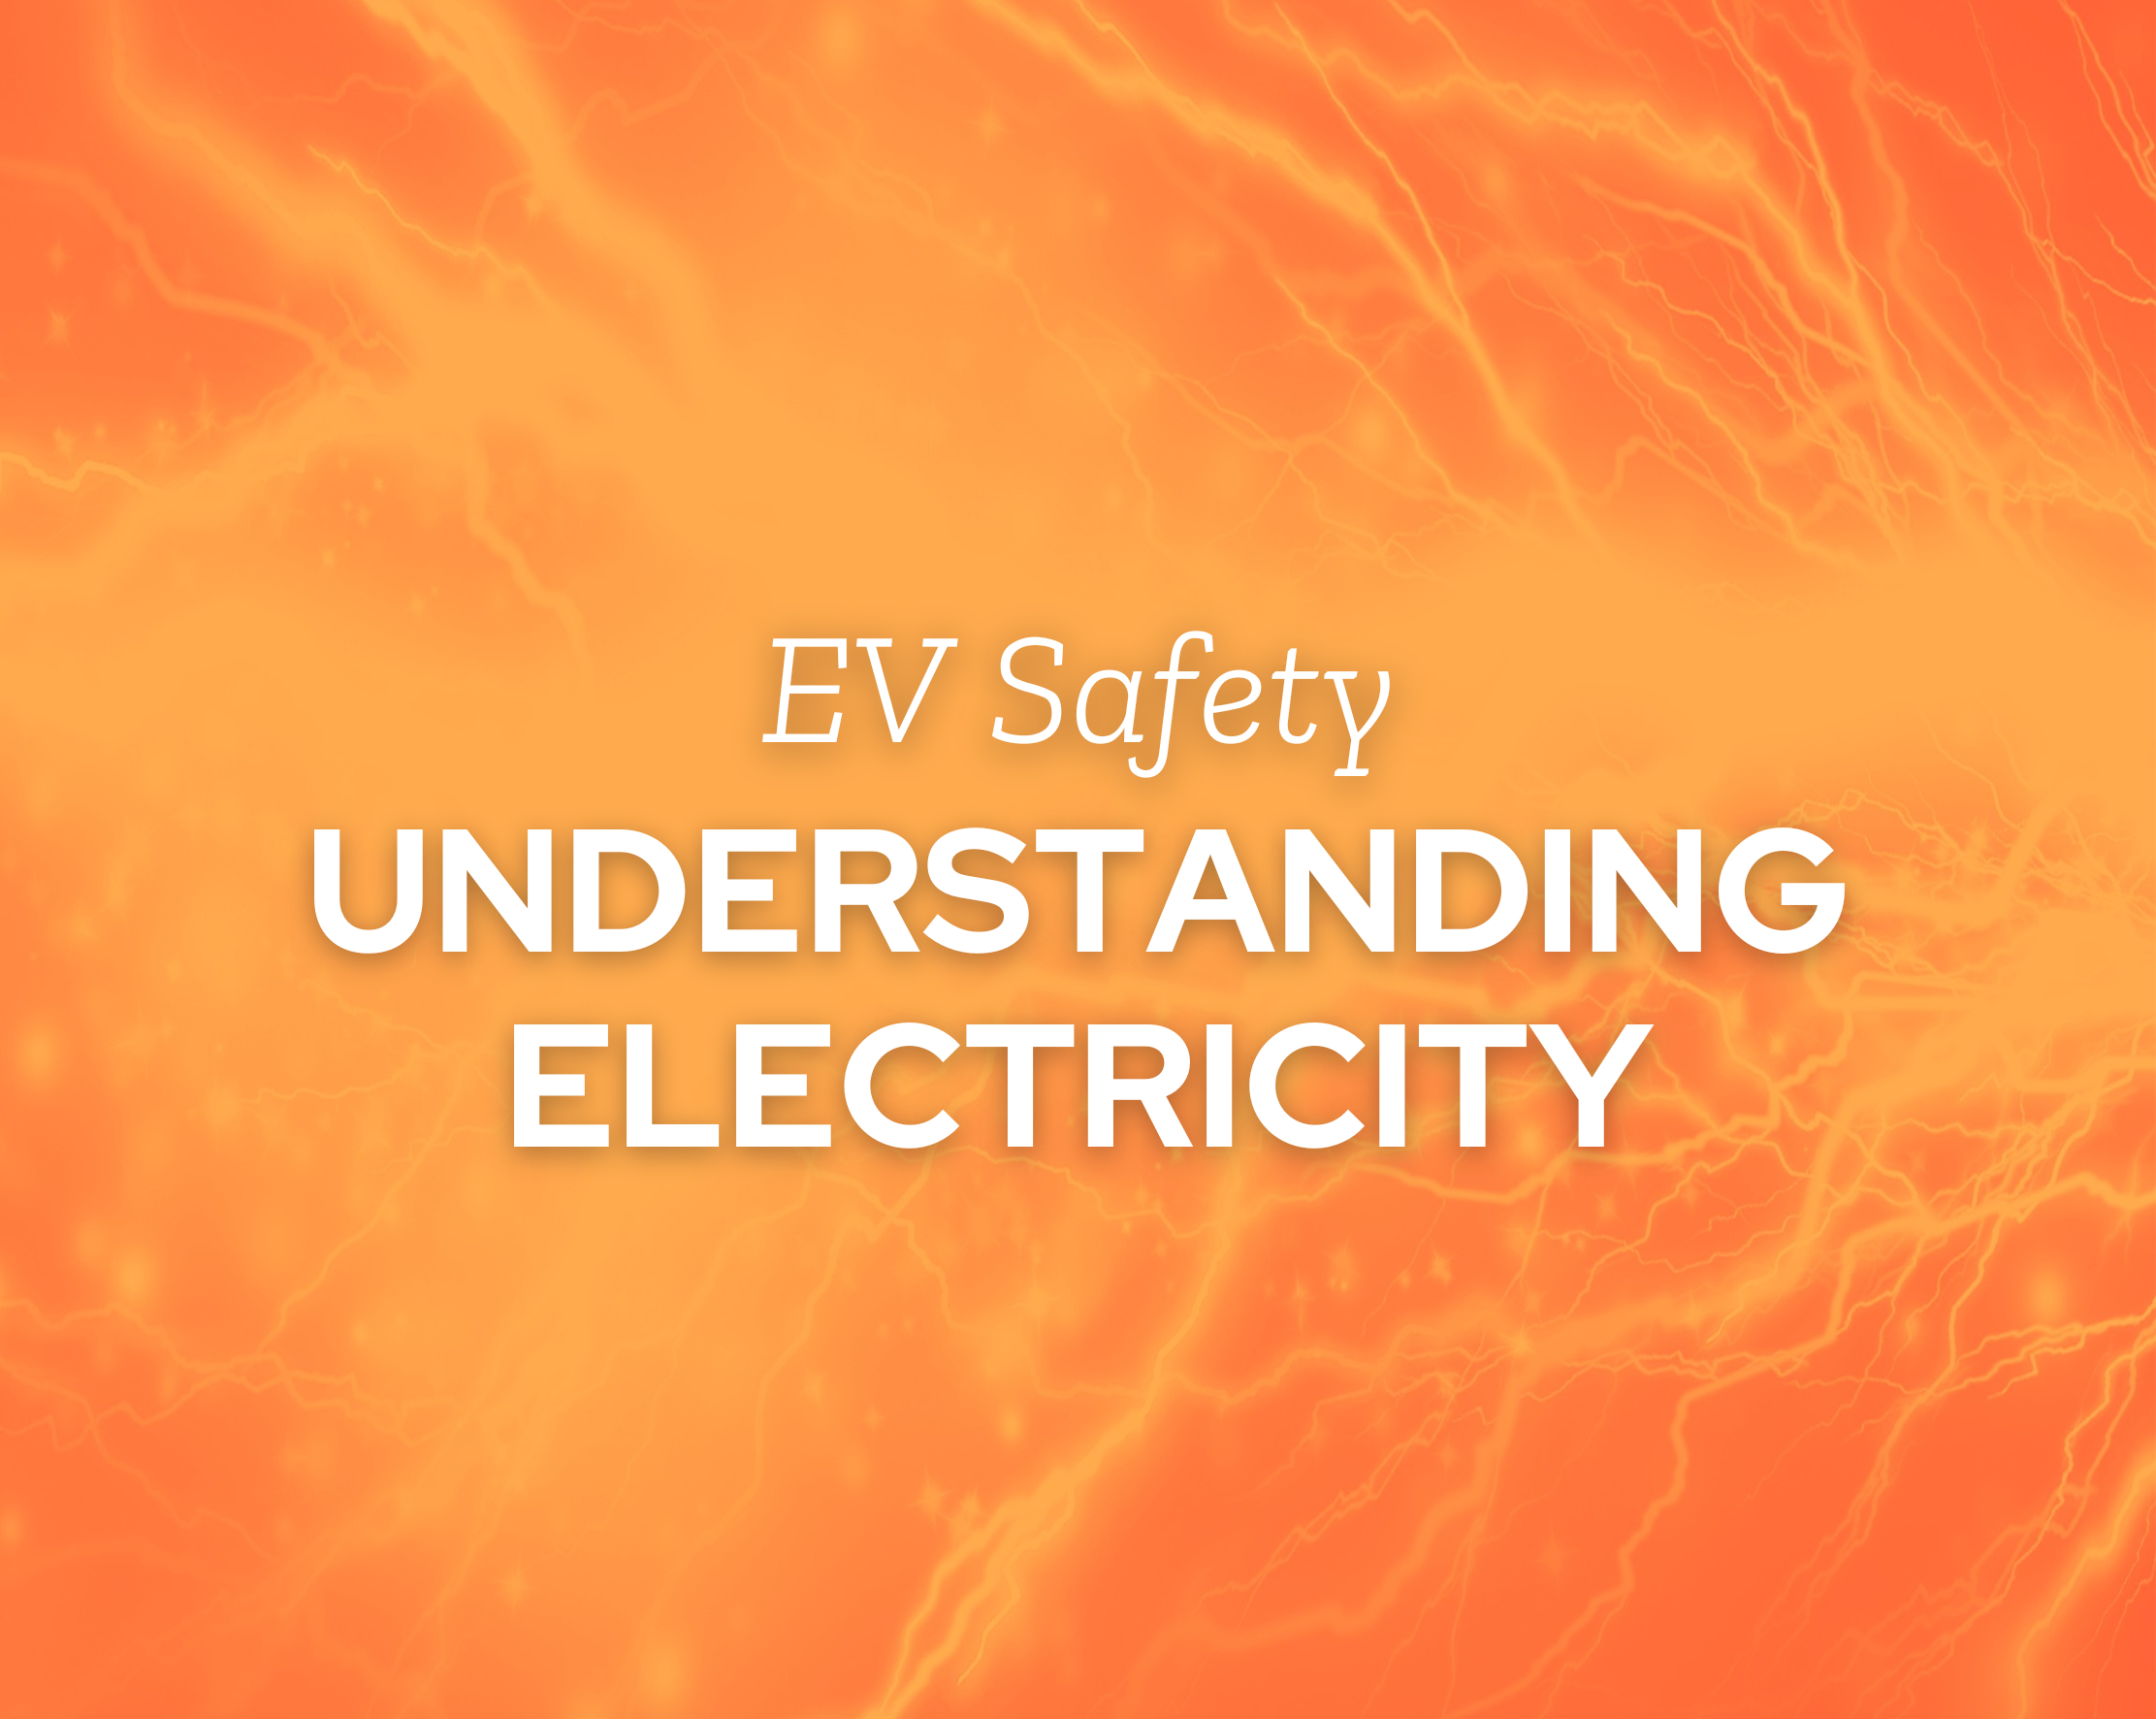 EV Safety: Understanding Electricity